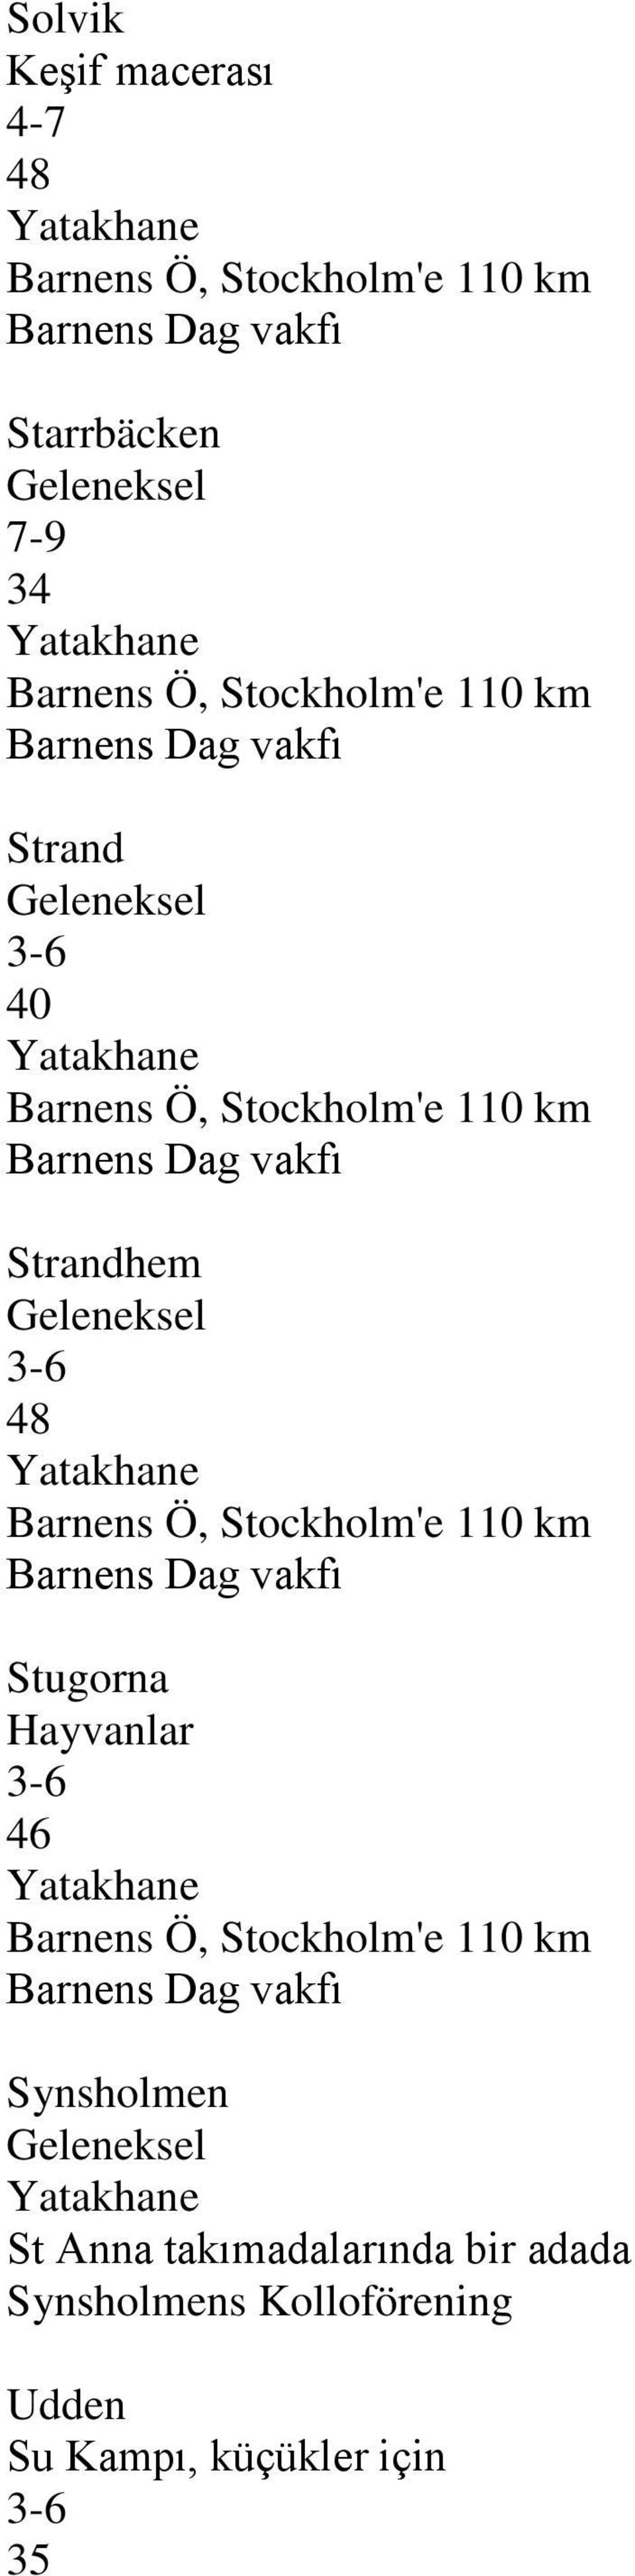 Barnens Ö, Stockholm'e 110 km Stugorna Hayvanlar 3-6 46 Barnens Ö, Stockholm'e 110 km Synsholmen